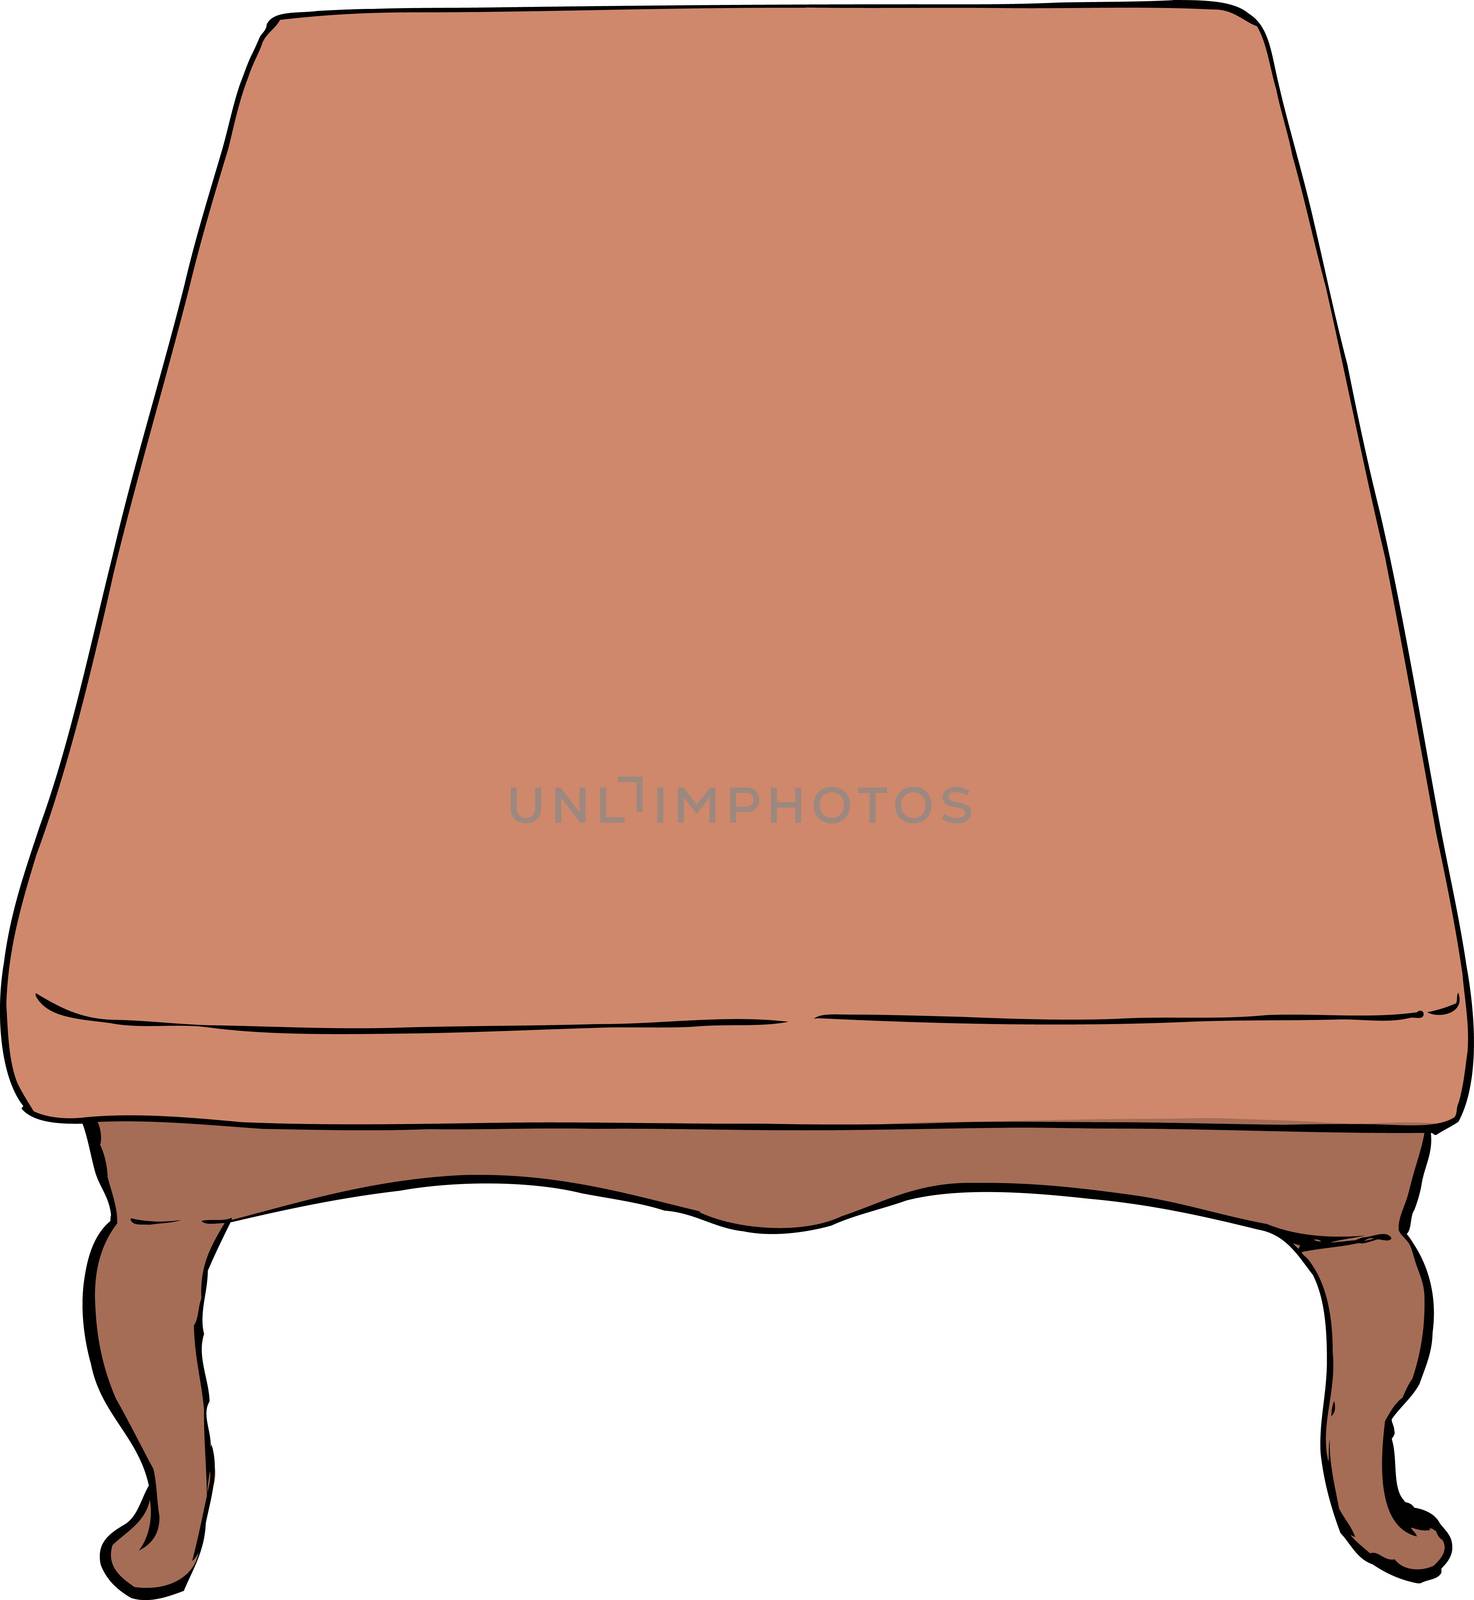 Short antique table illustration by TheBlackRhino